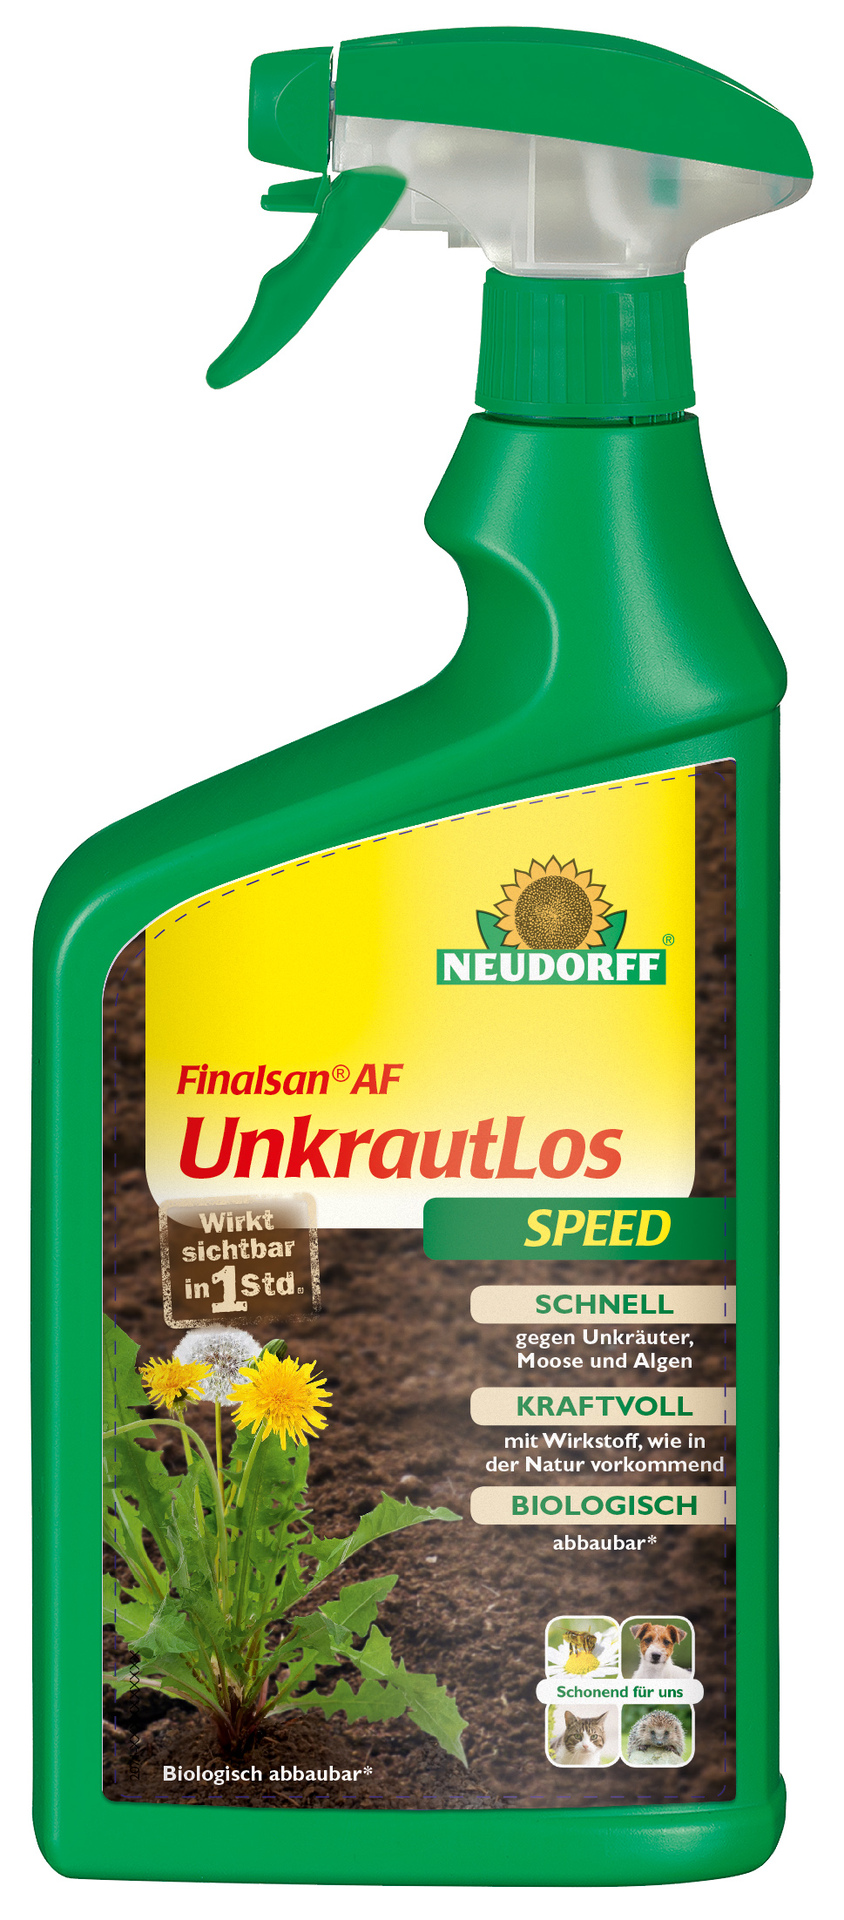 W. Neudorff GmbH KG Finalsan AF UnkrautLos Speed